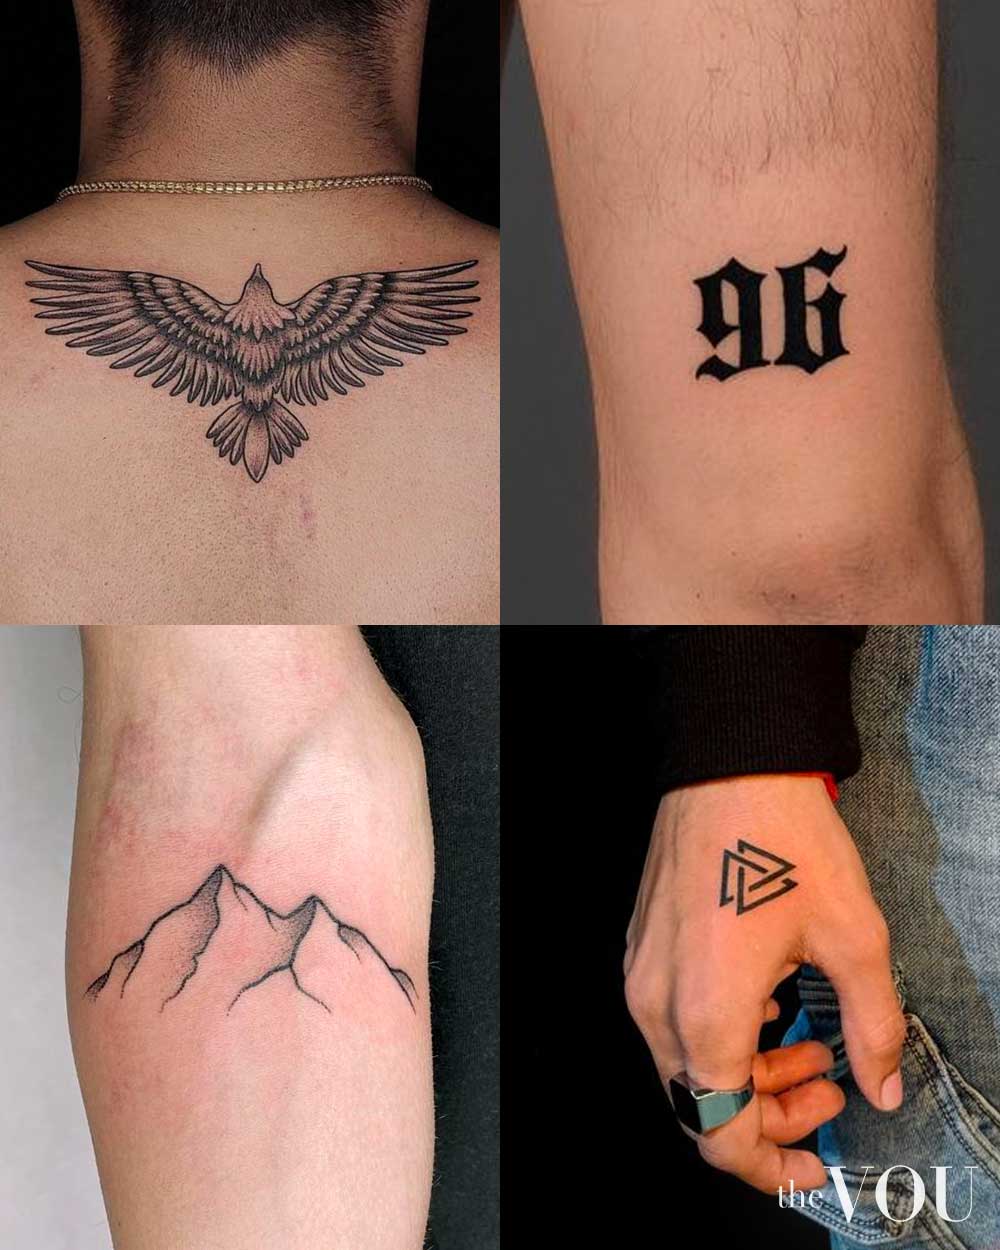 Cool Tattoos Dublin | The Ink Factory | Dublin 2 Ireland